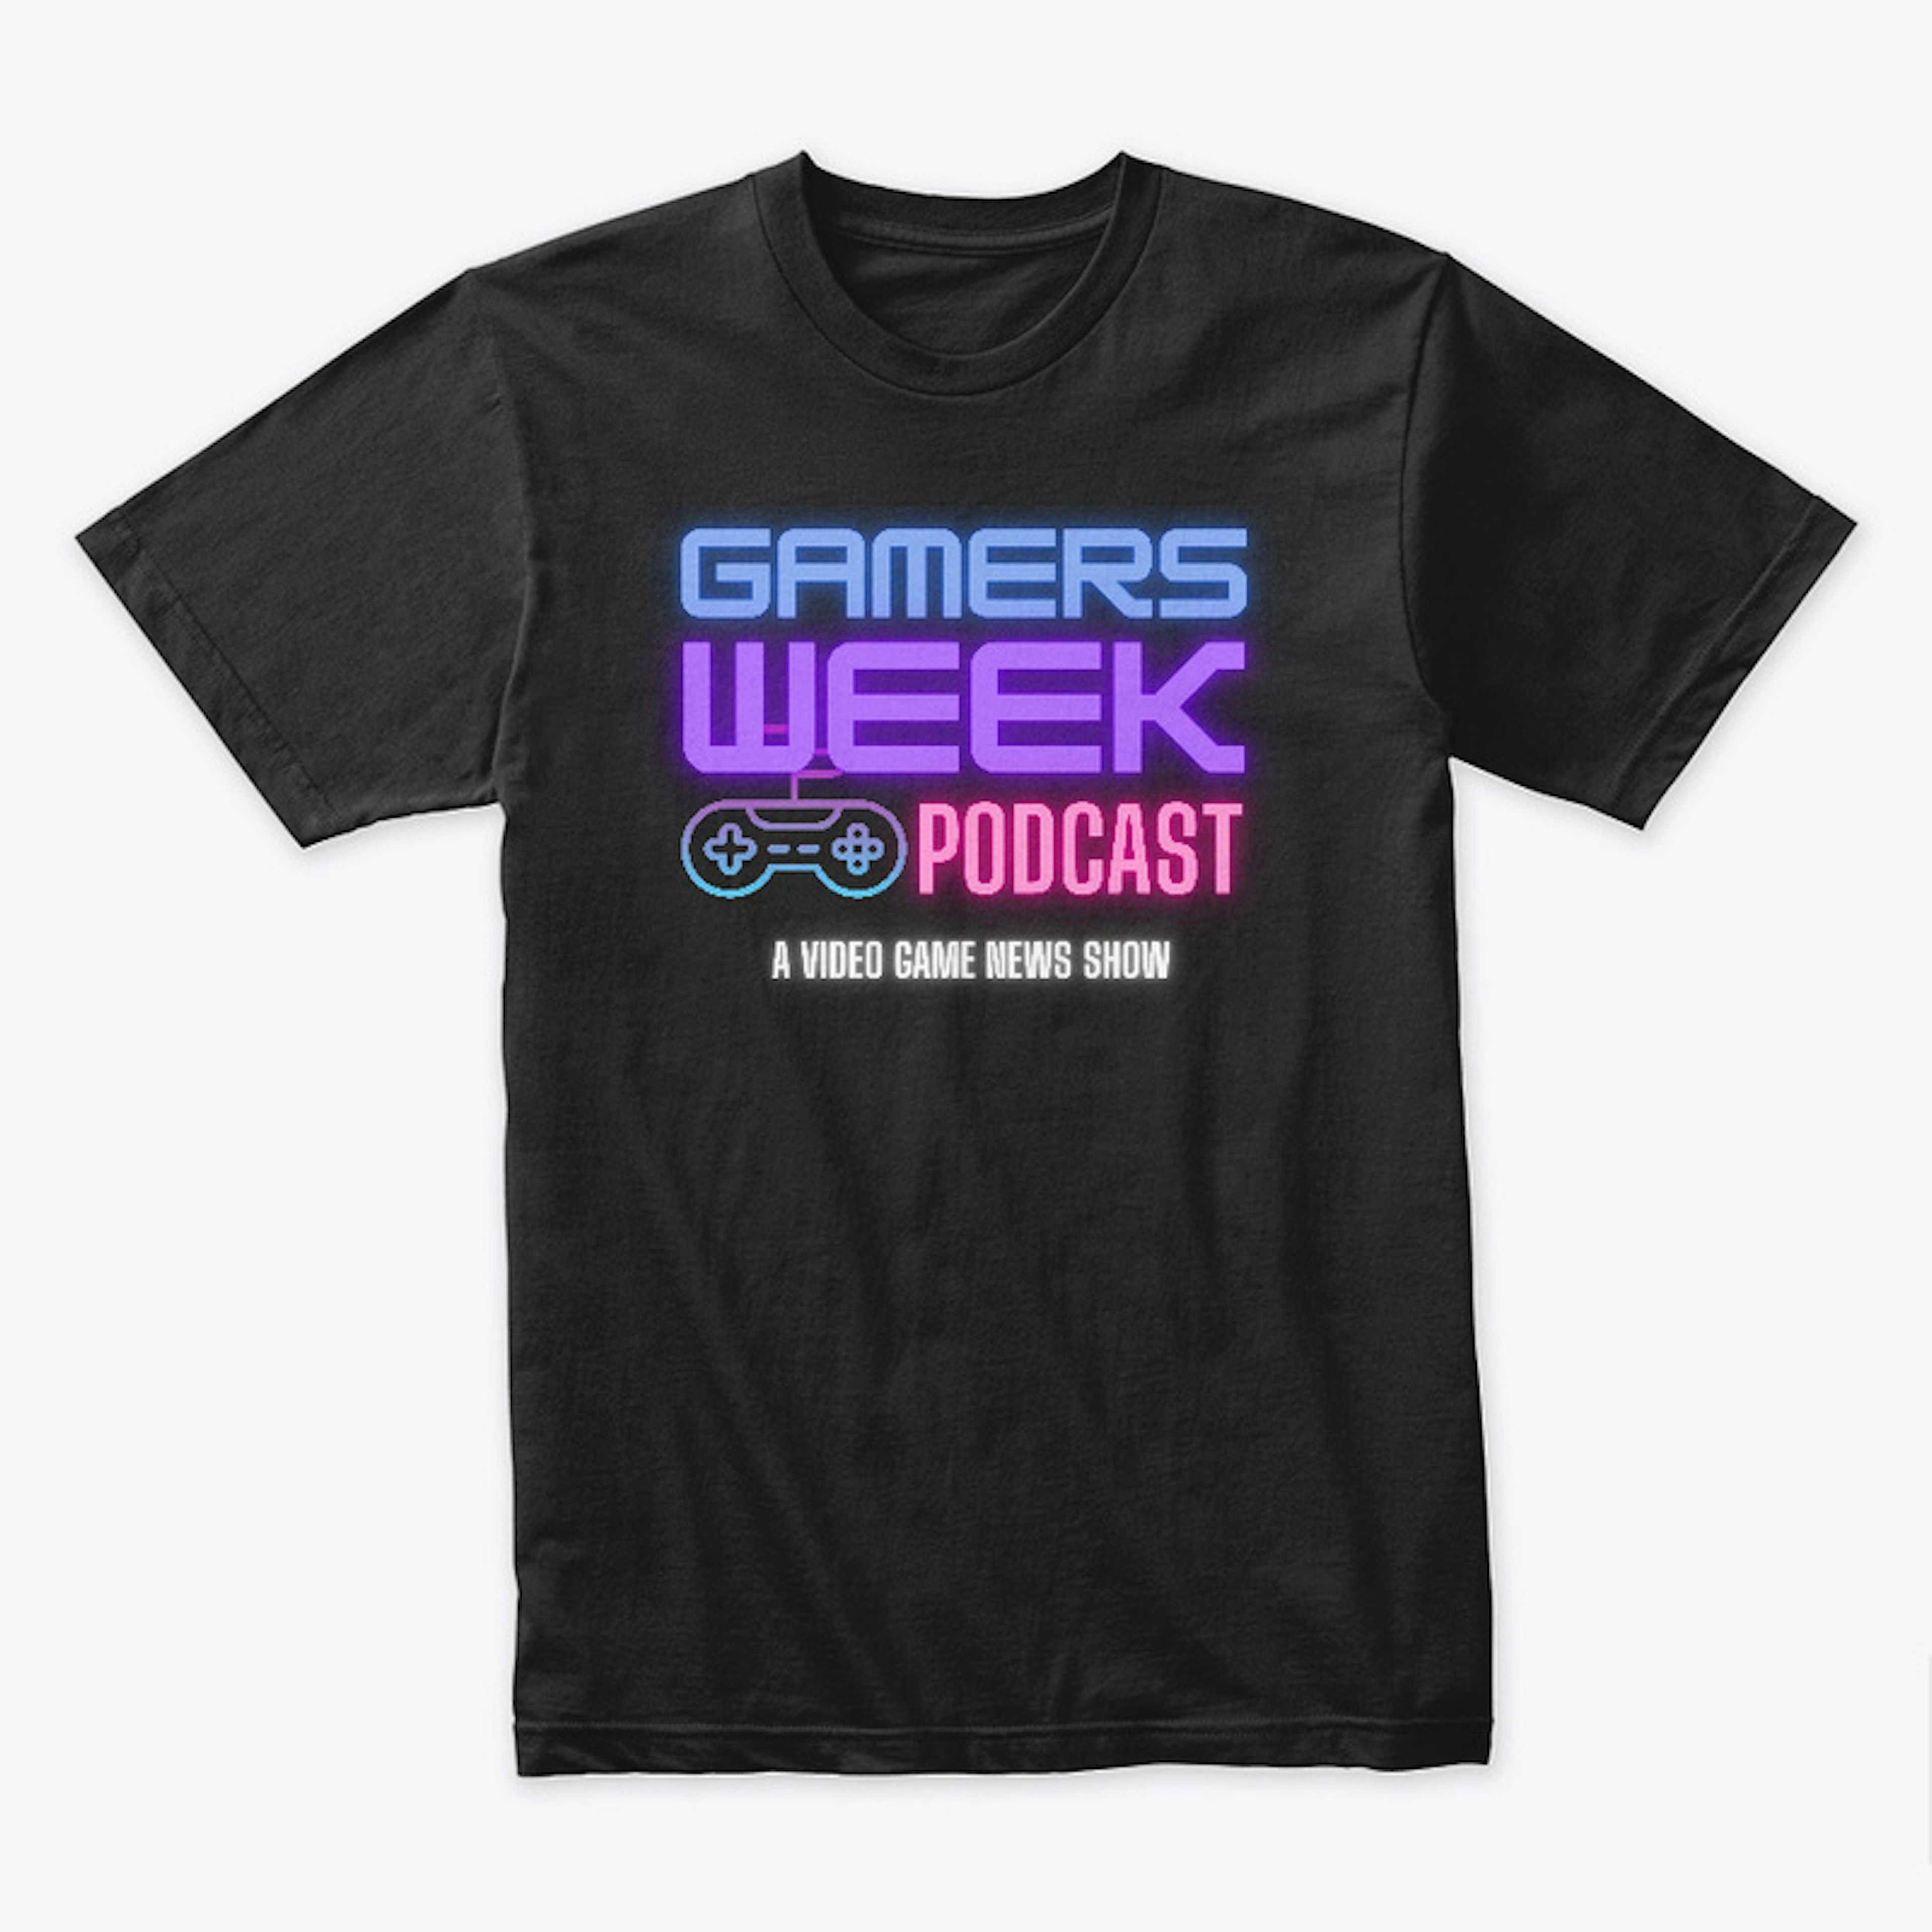 Gamers Week Podcast Premium Tee